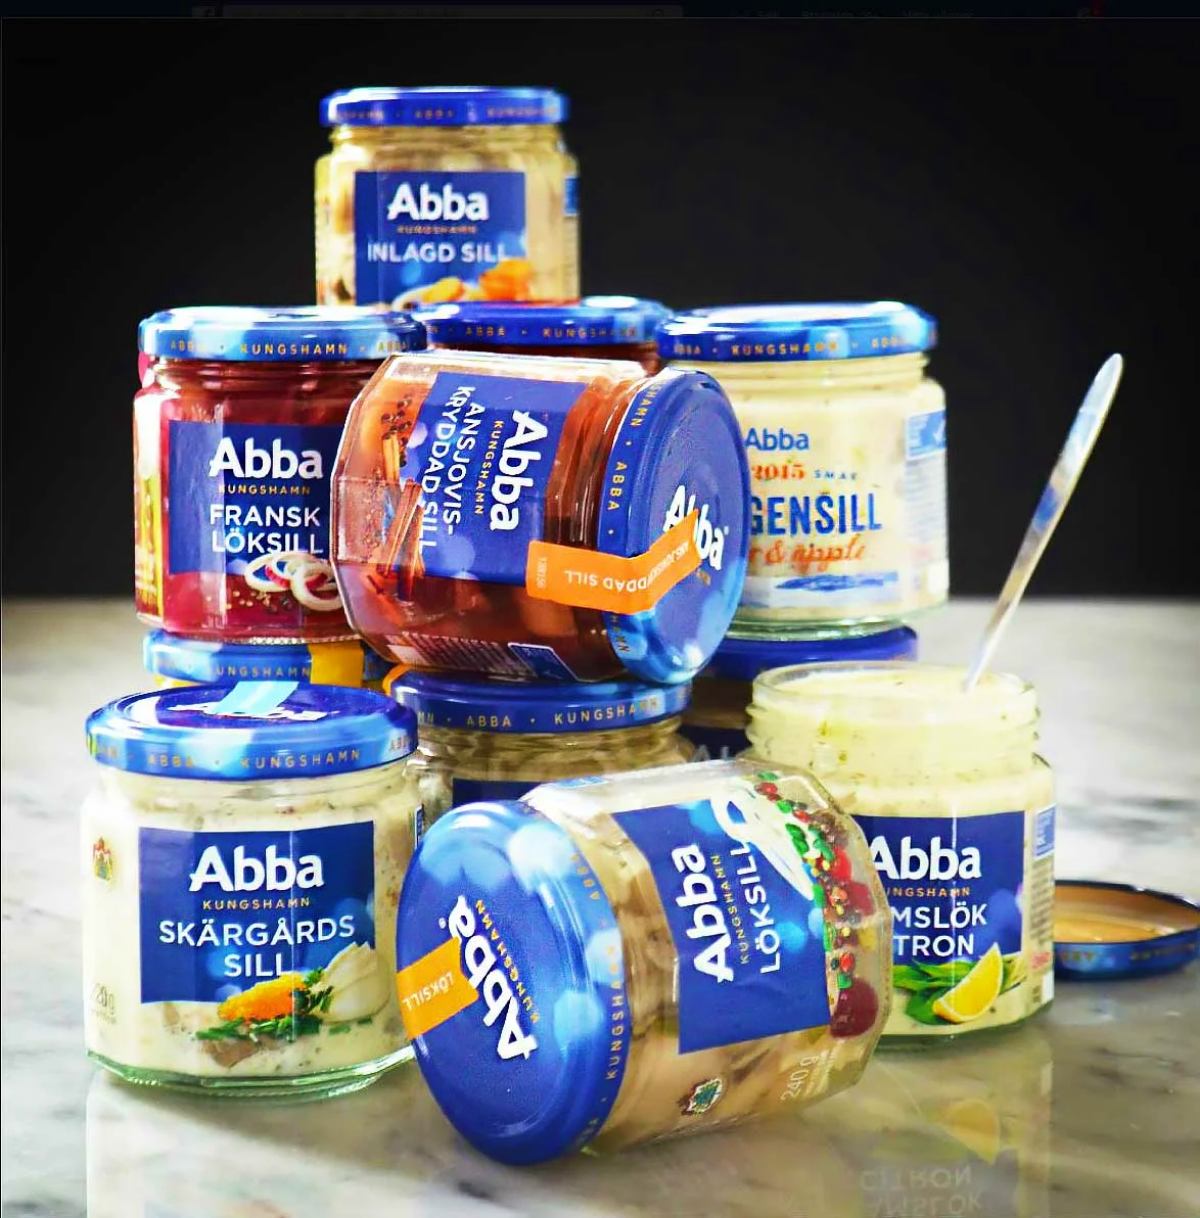 Abba 也是一家瑞典魚類公司的名字！